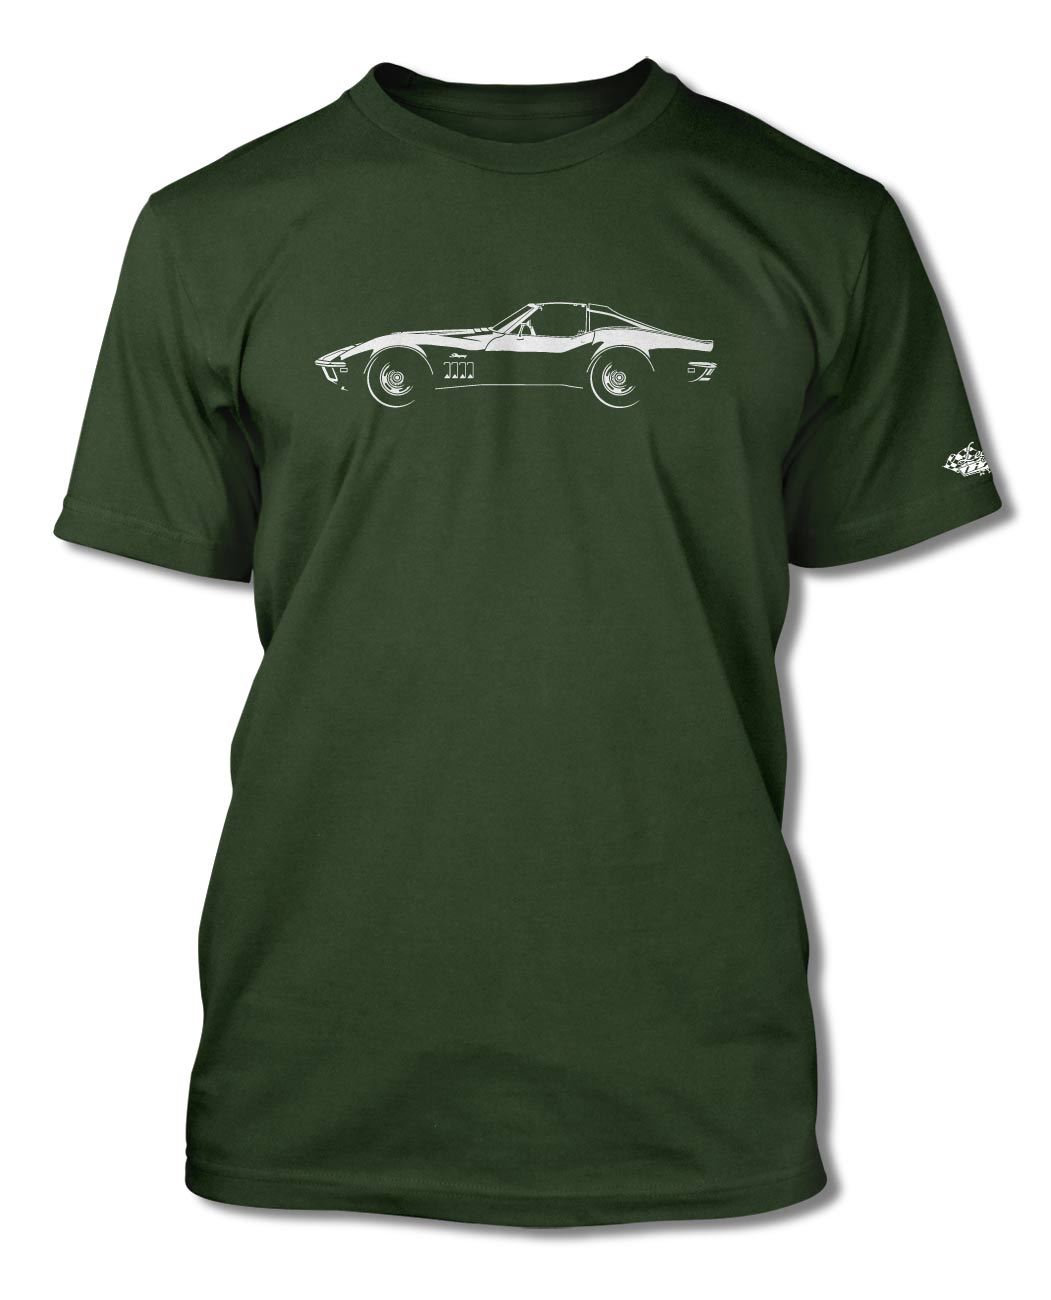 1969 Corvette Apparel T-Shirt